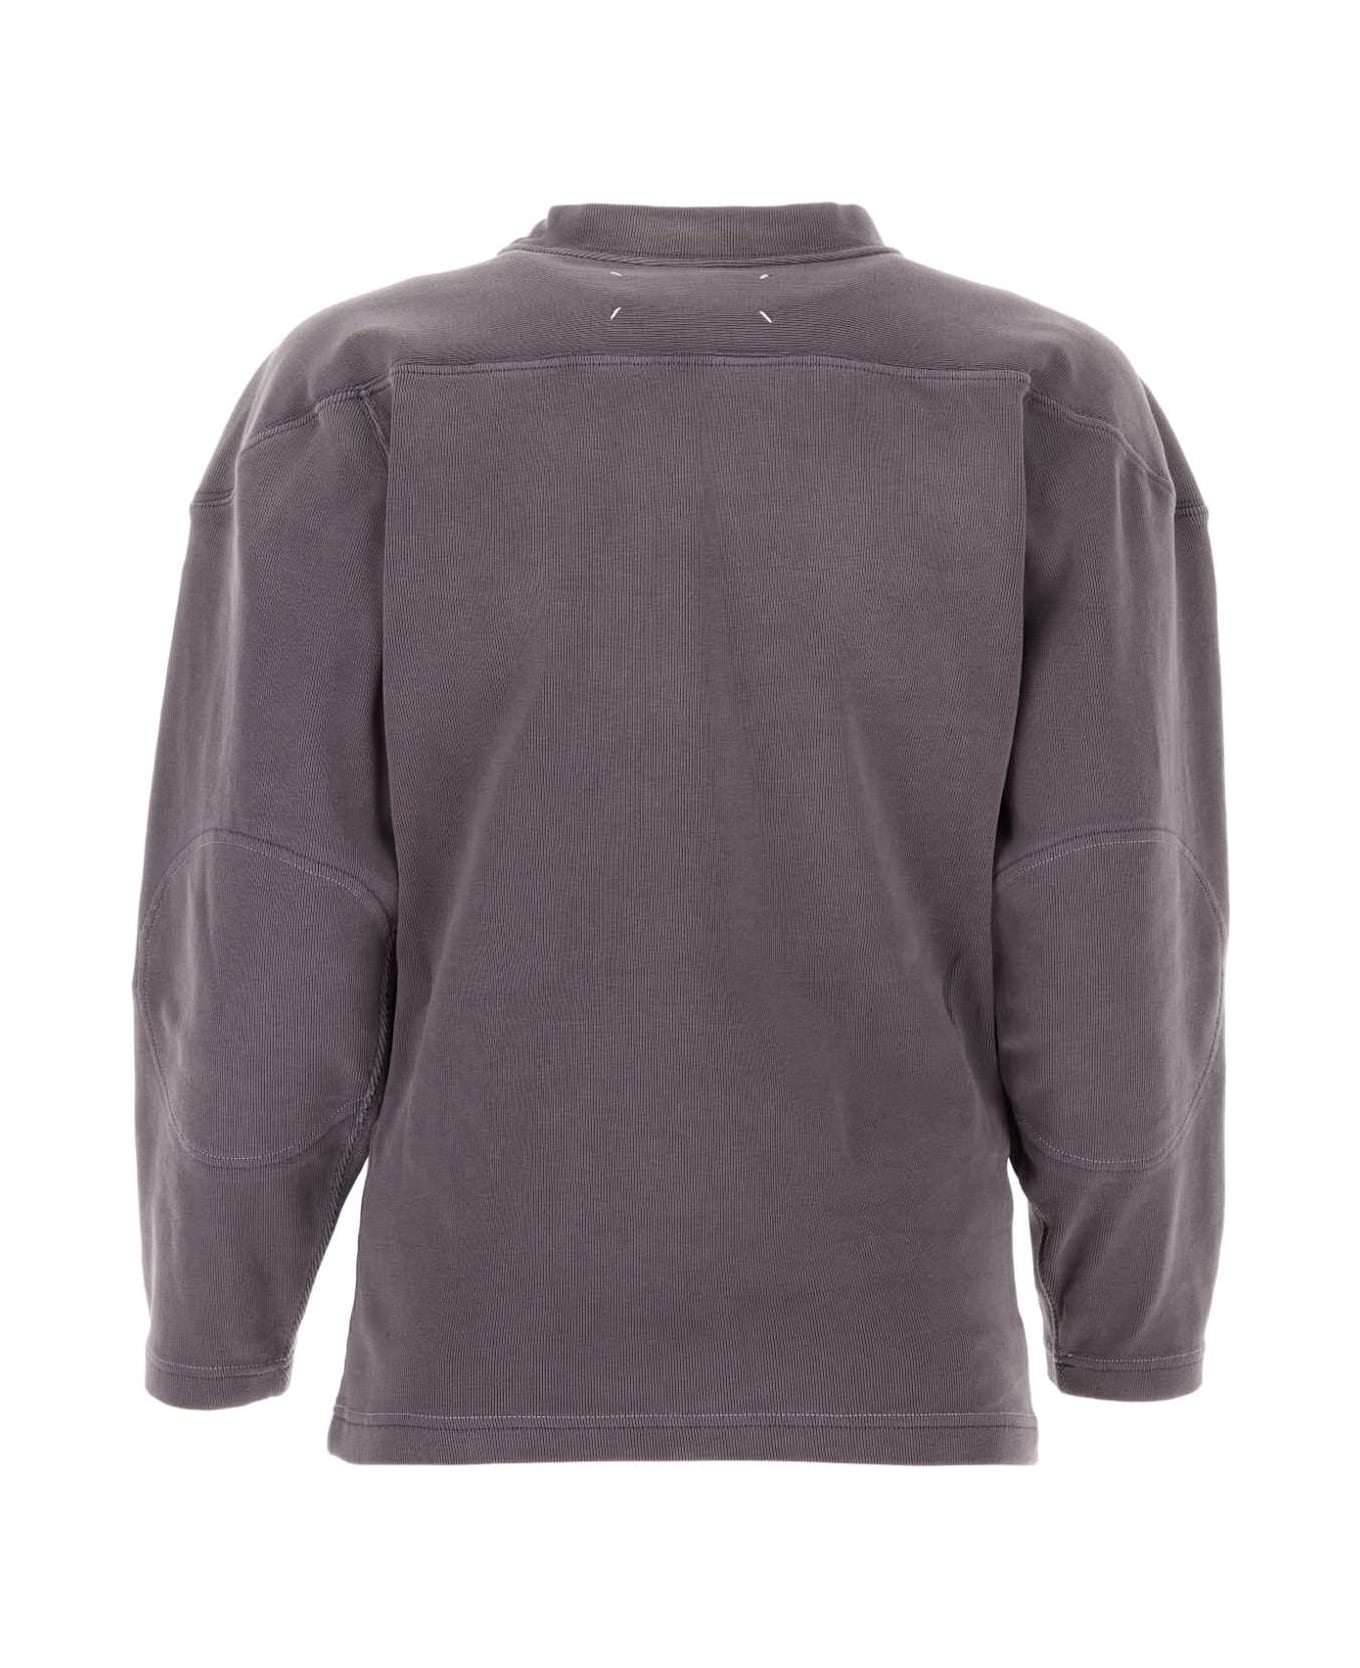 Maison Margiela Purple Cotton Sweatshirt - AUBERGINE